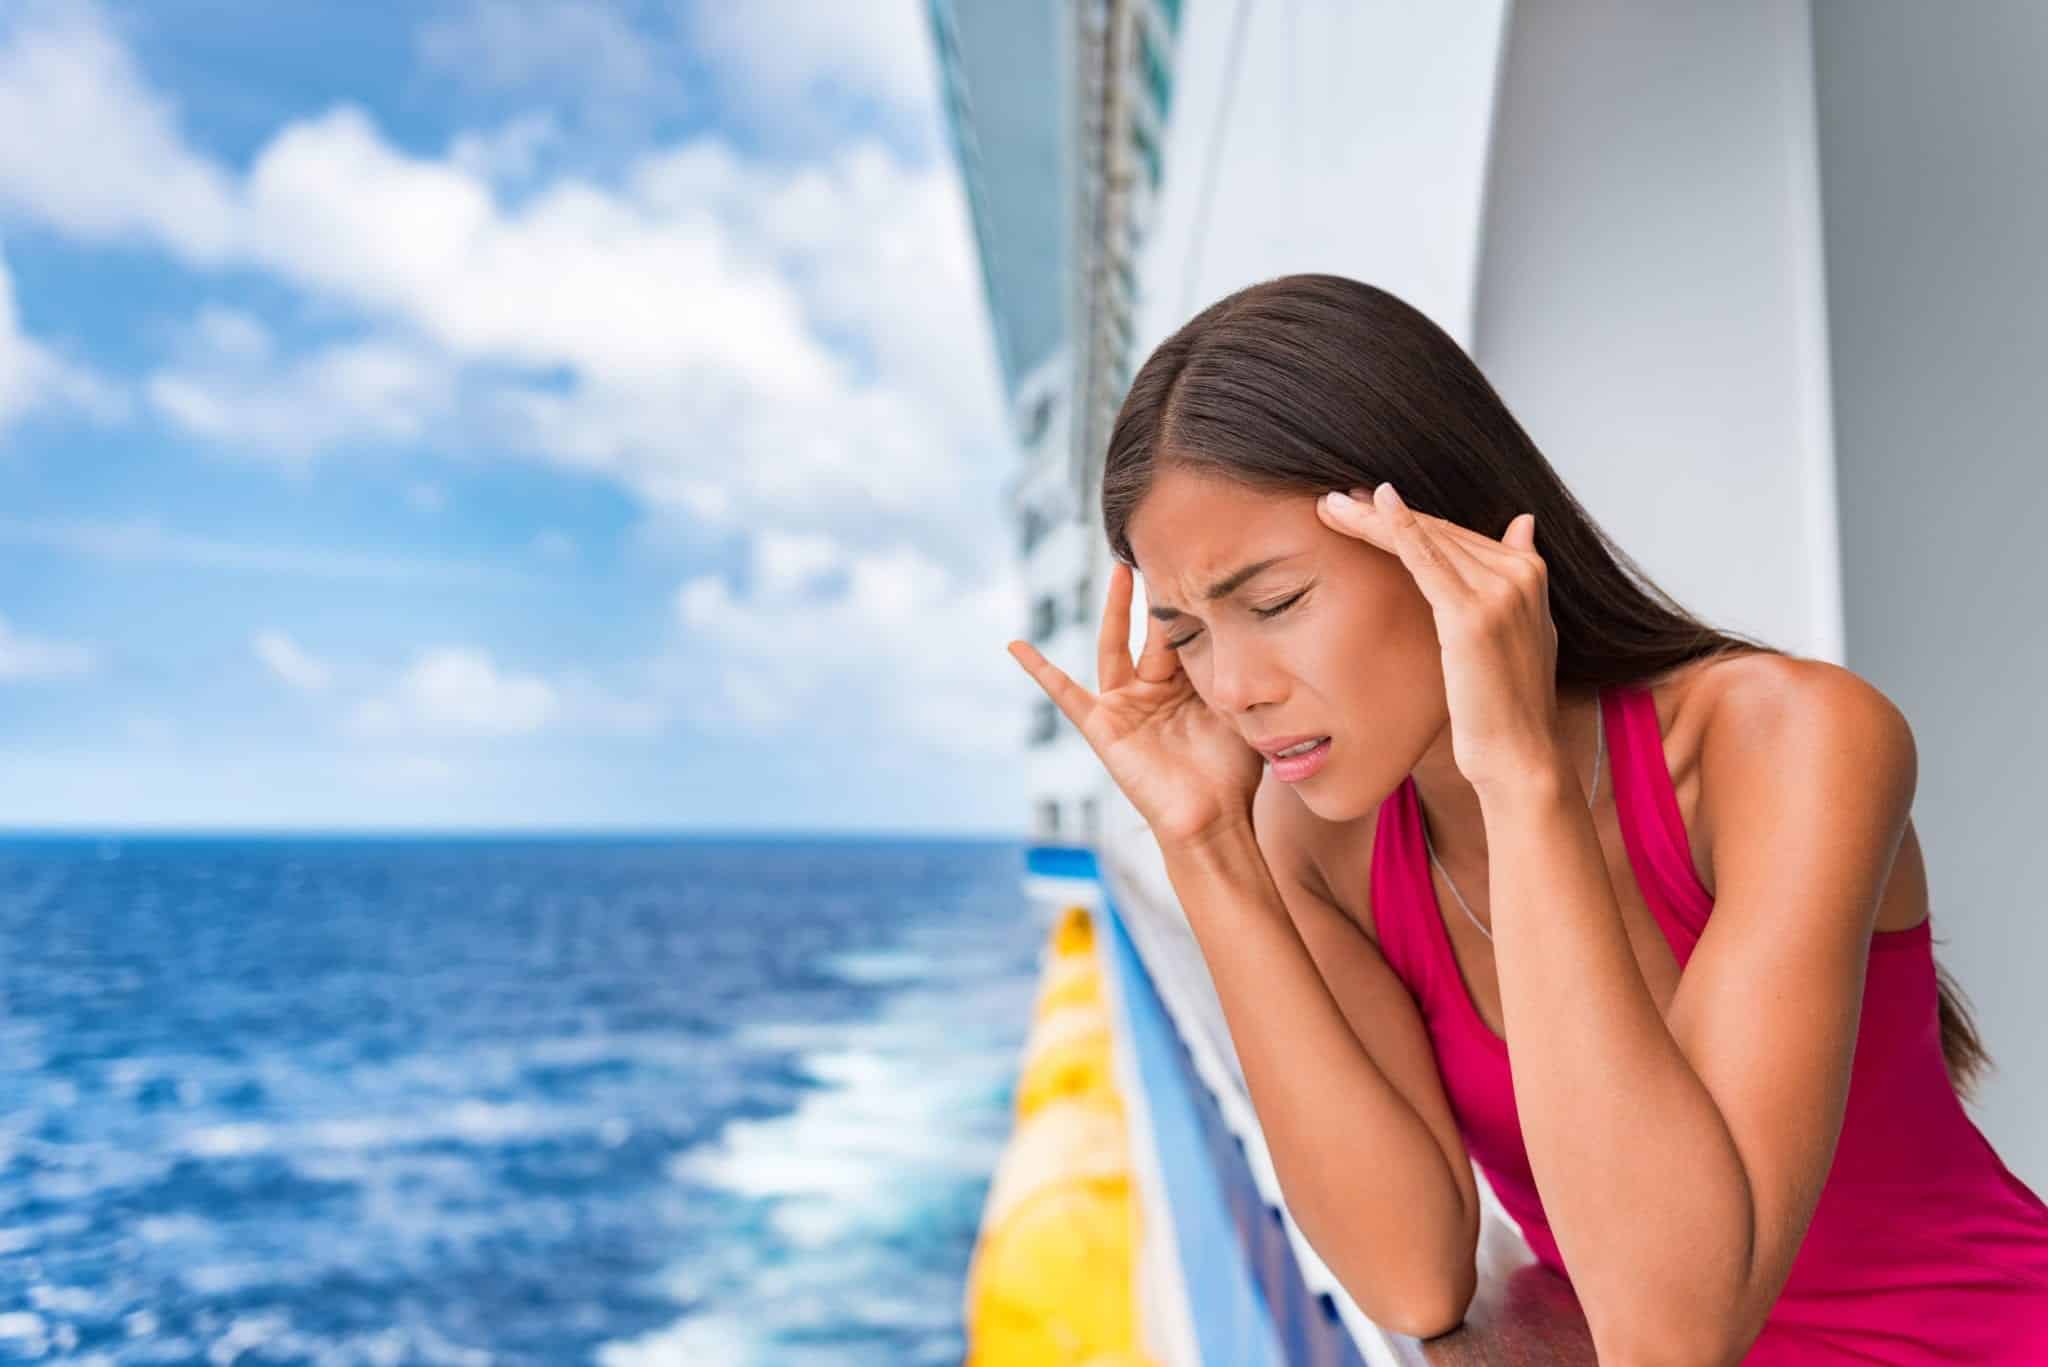 cruise ship sick passengers